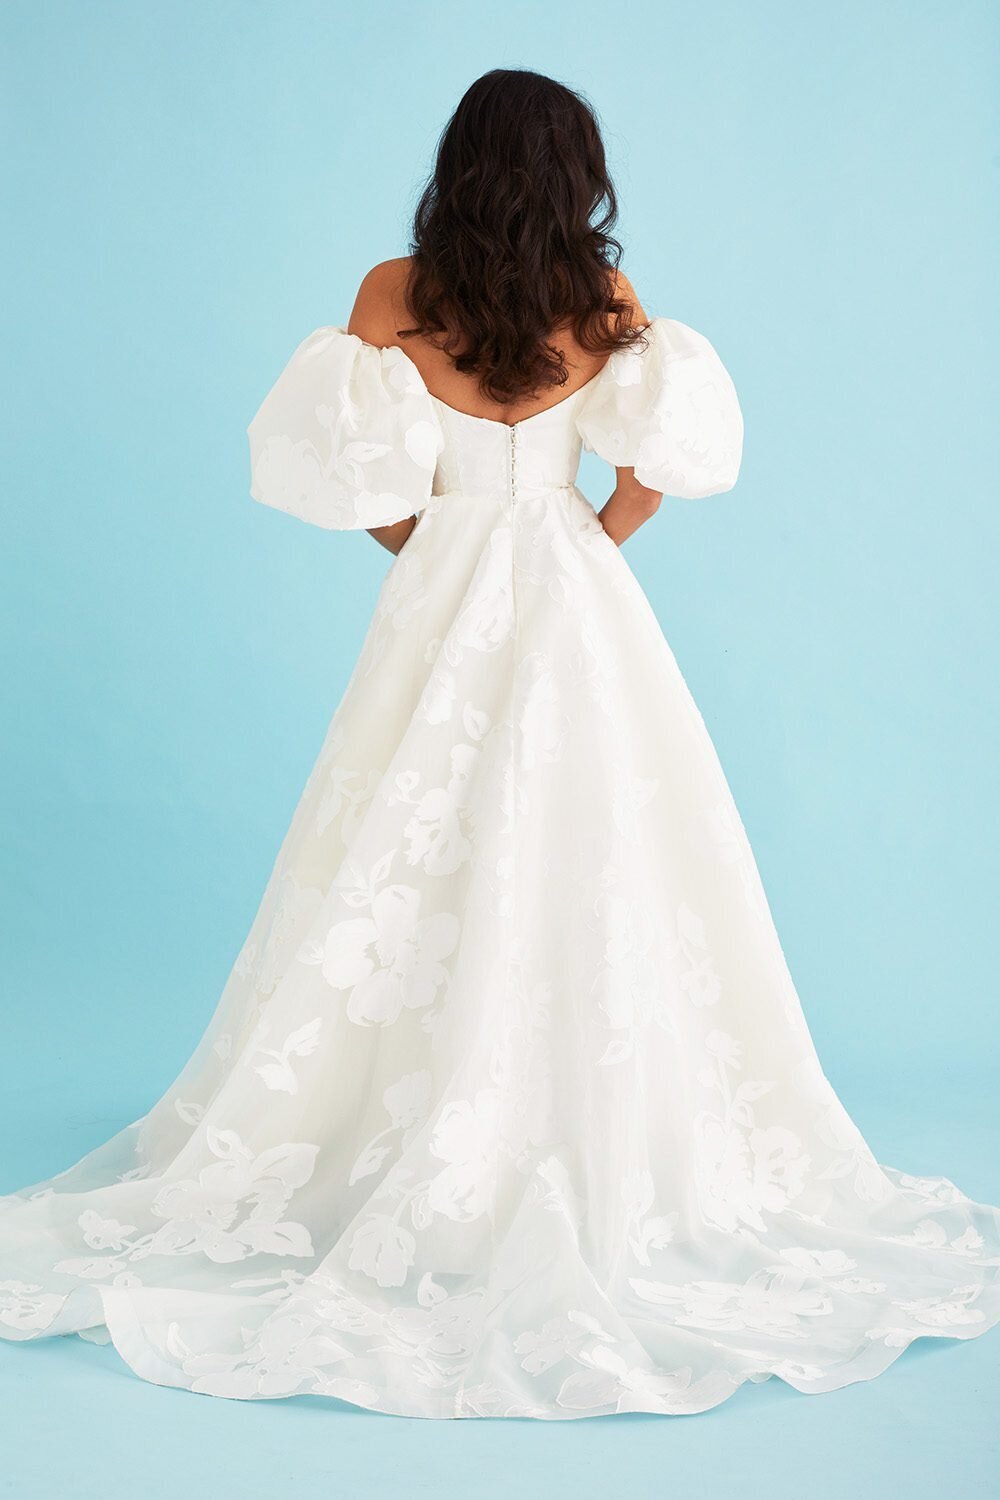 Dramatic Sleeve Ballgown wedding gown.